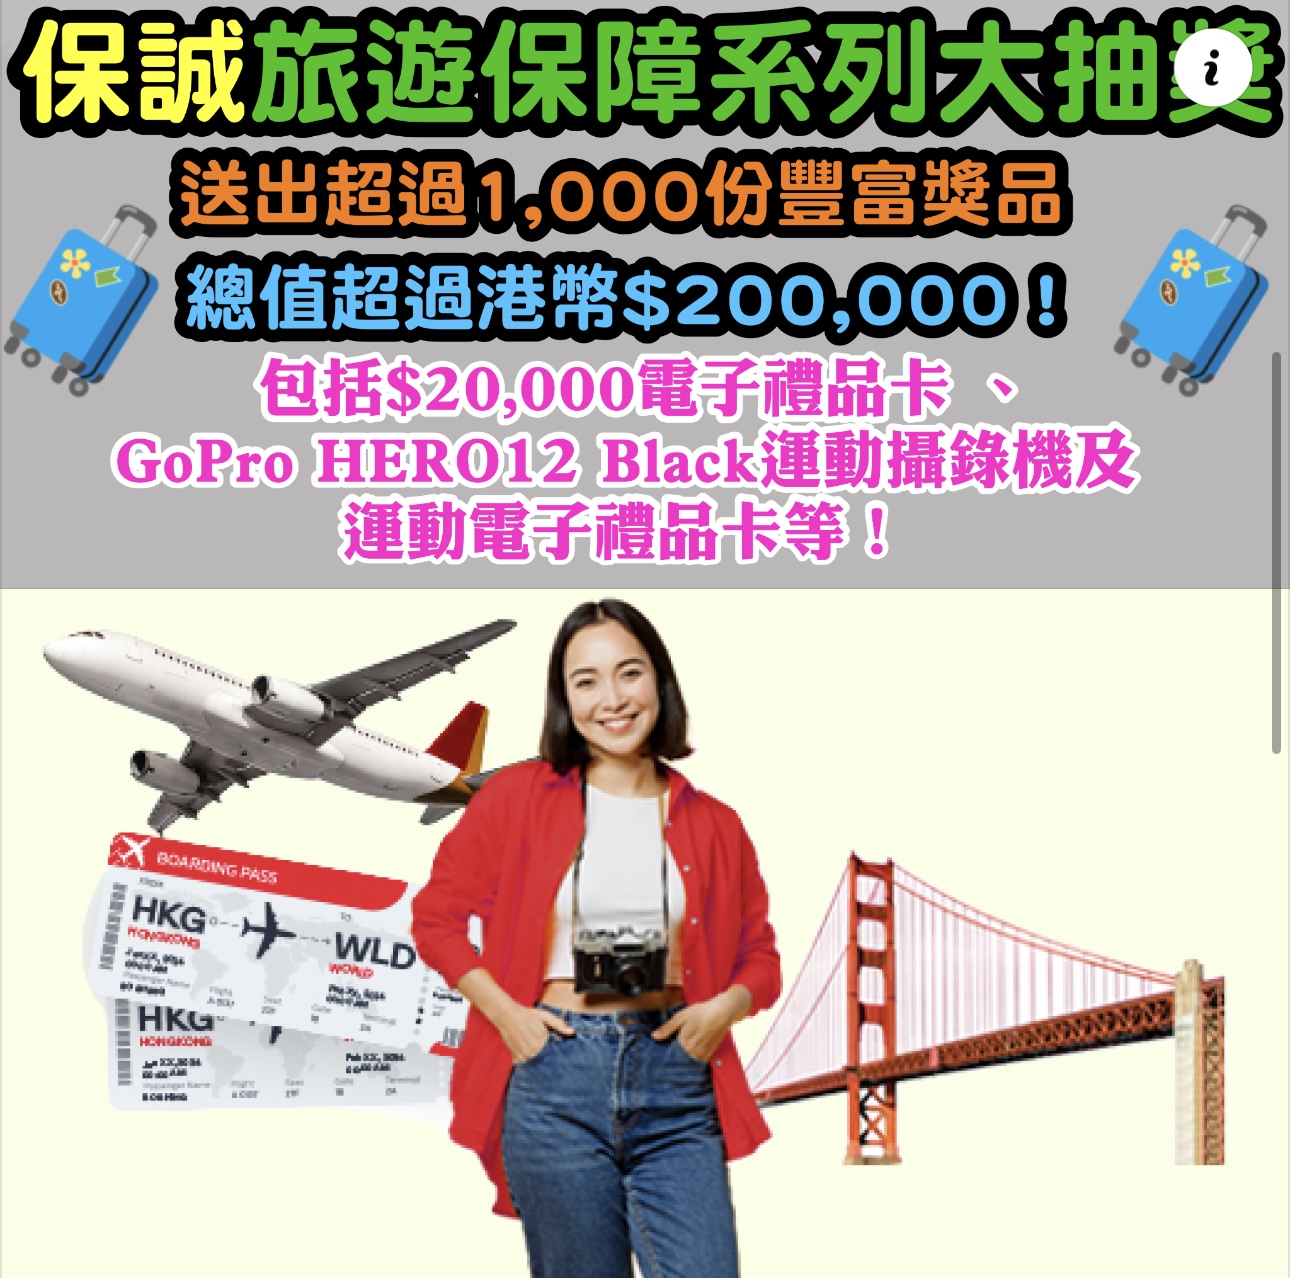 【🔥🔥 Prudential Hong Kong 保誠保險旅遊保障系列《無限制Chill住飛》大抽獎✈️第二輪開始啦❗】 送出超過1,000份豐富獎品，總值超過$200,000❗😍大獎係$20,000 Trip.com旅遊電子禮品卡，其他獎品包括GoPro HERO12運動攝錄機及Decathlon運動電子禮品卡等❗